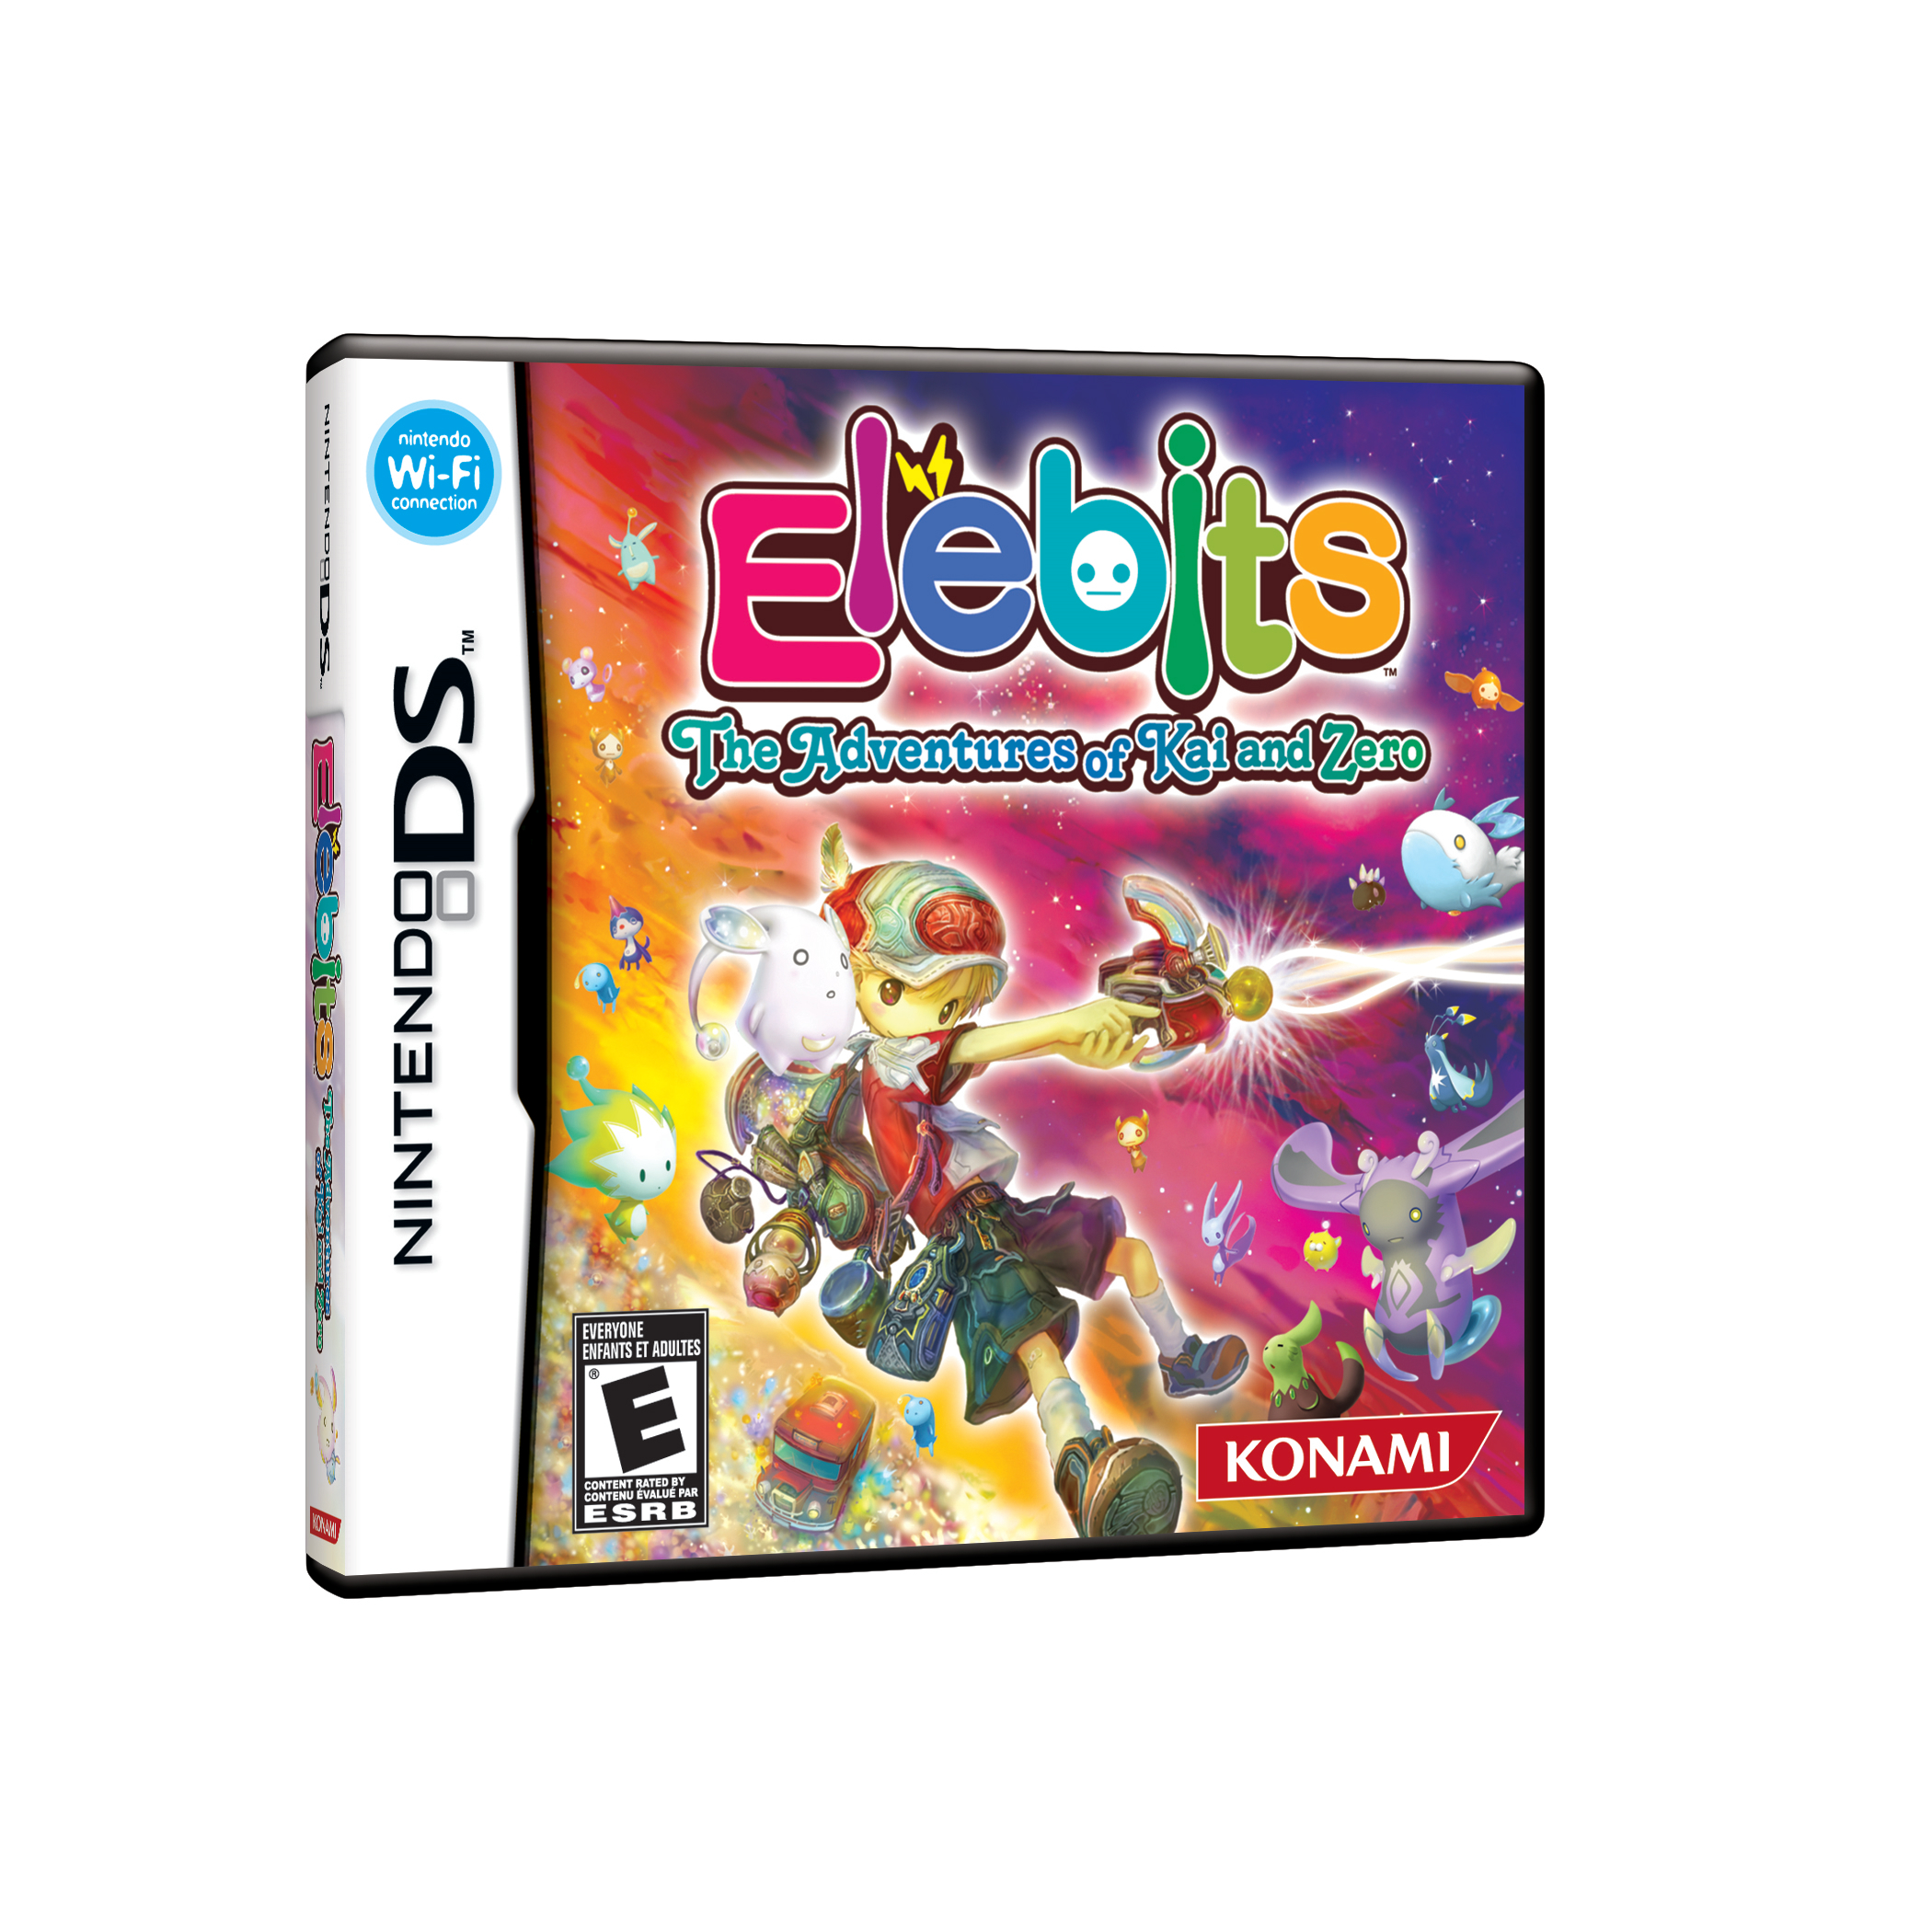 Eledees: The Adventures of Kai and Zero (DS) Boxart - Pure Nintendo